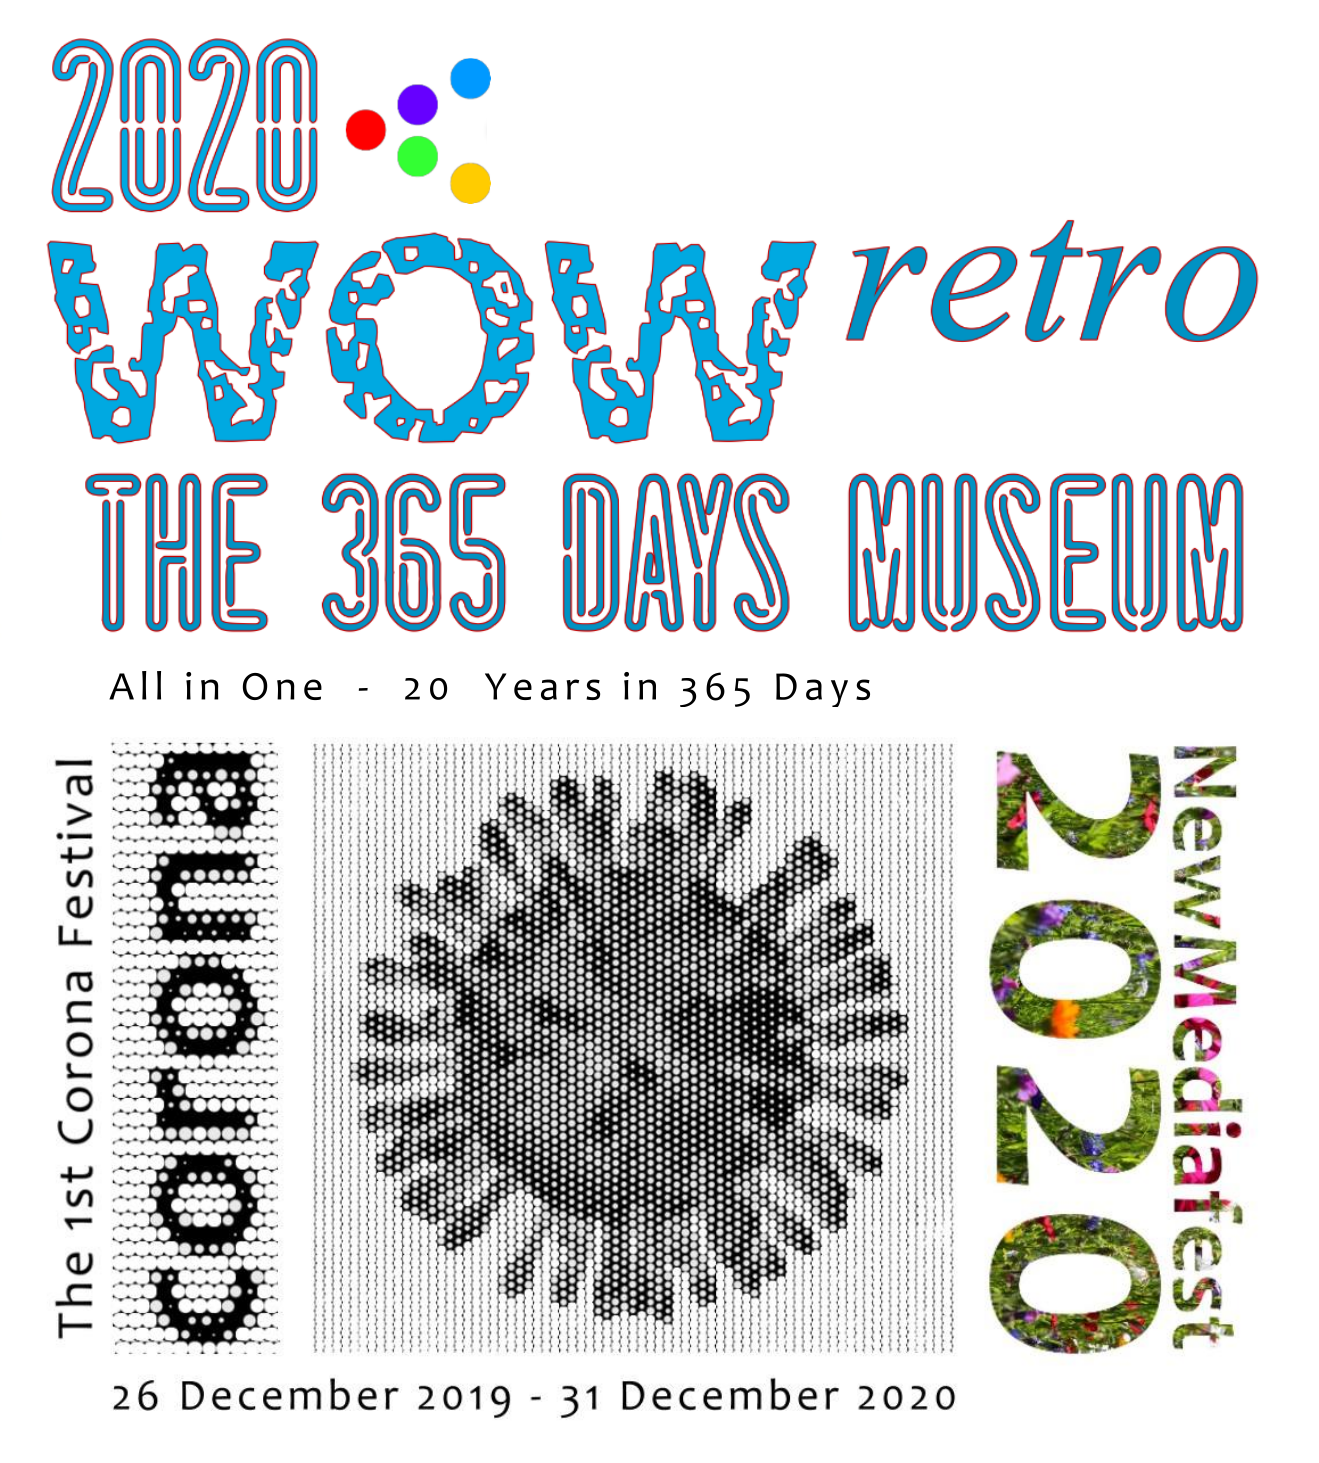 WOWretro - the 365 Days Museum